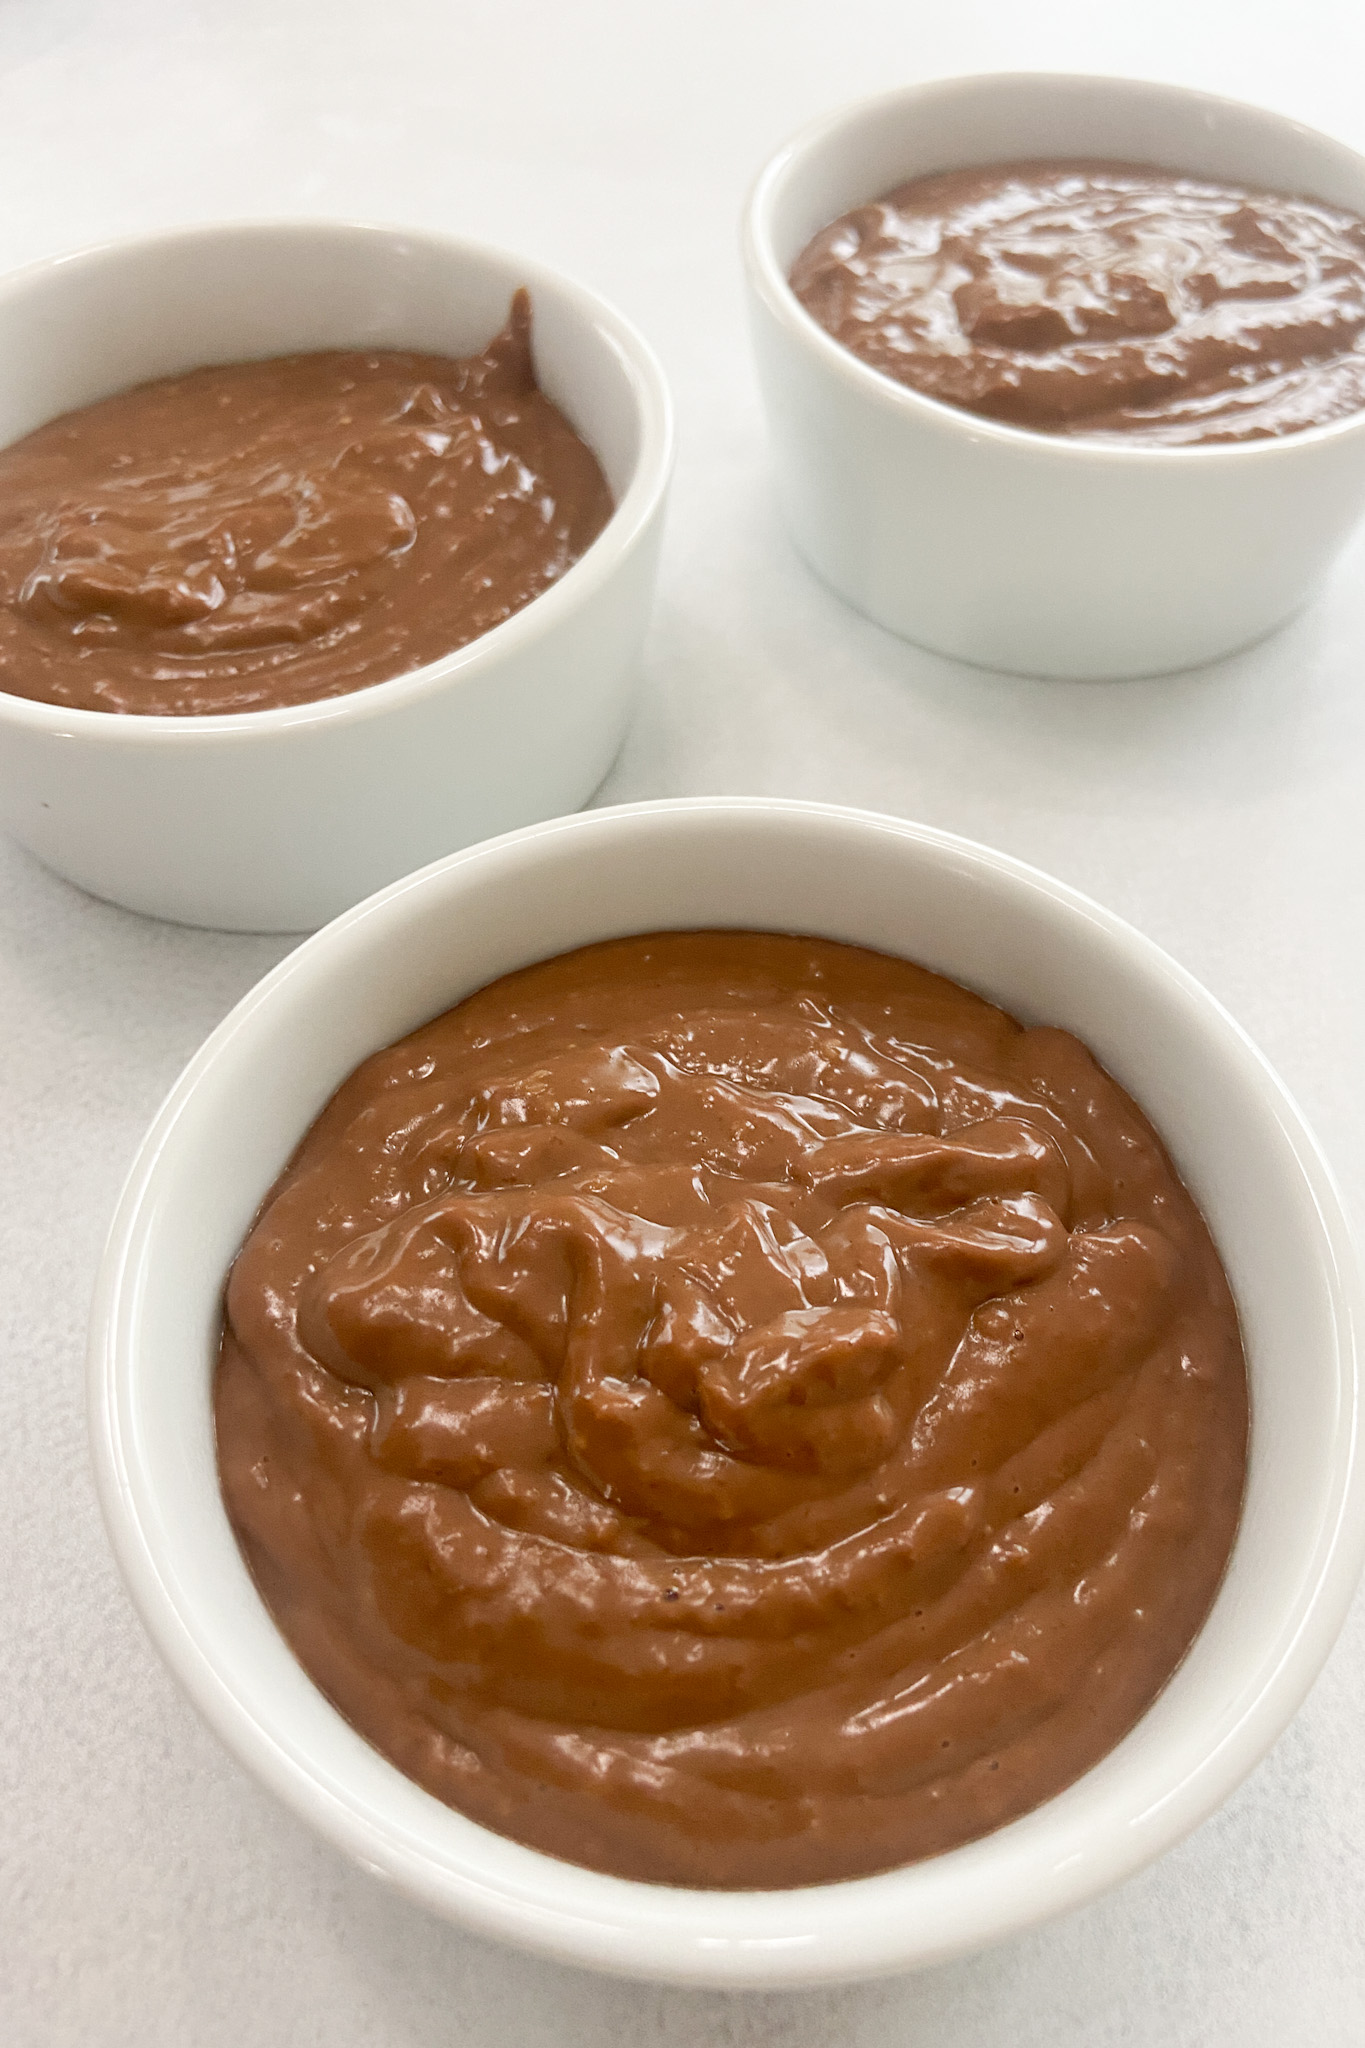 Oatmeal chocolate pudding